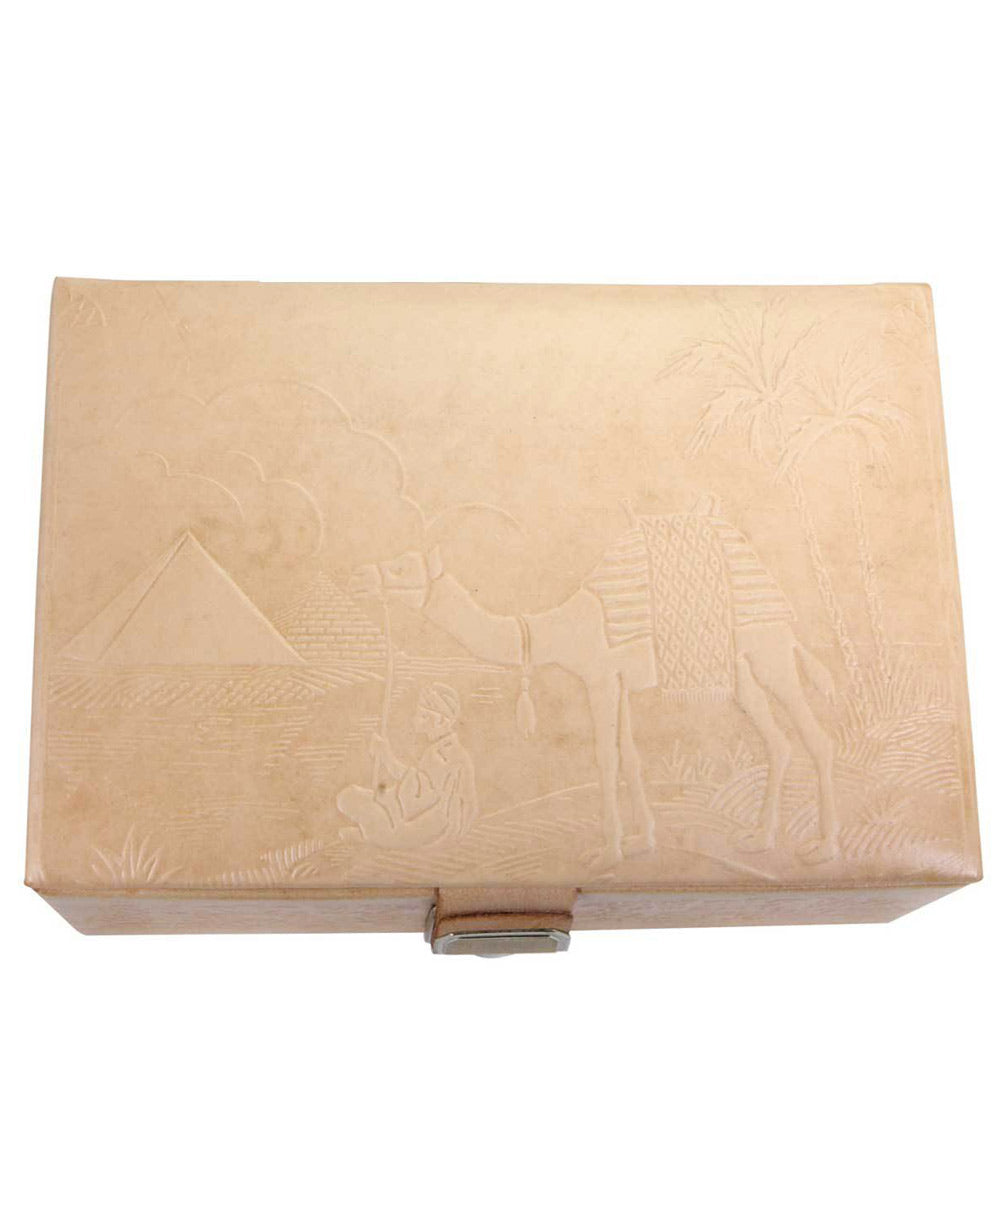 Egyptian Embossed Jewelry Box